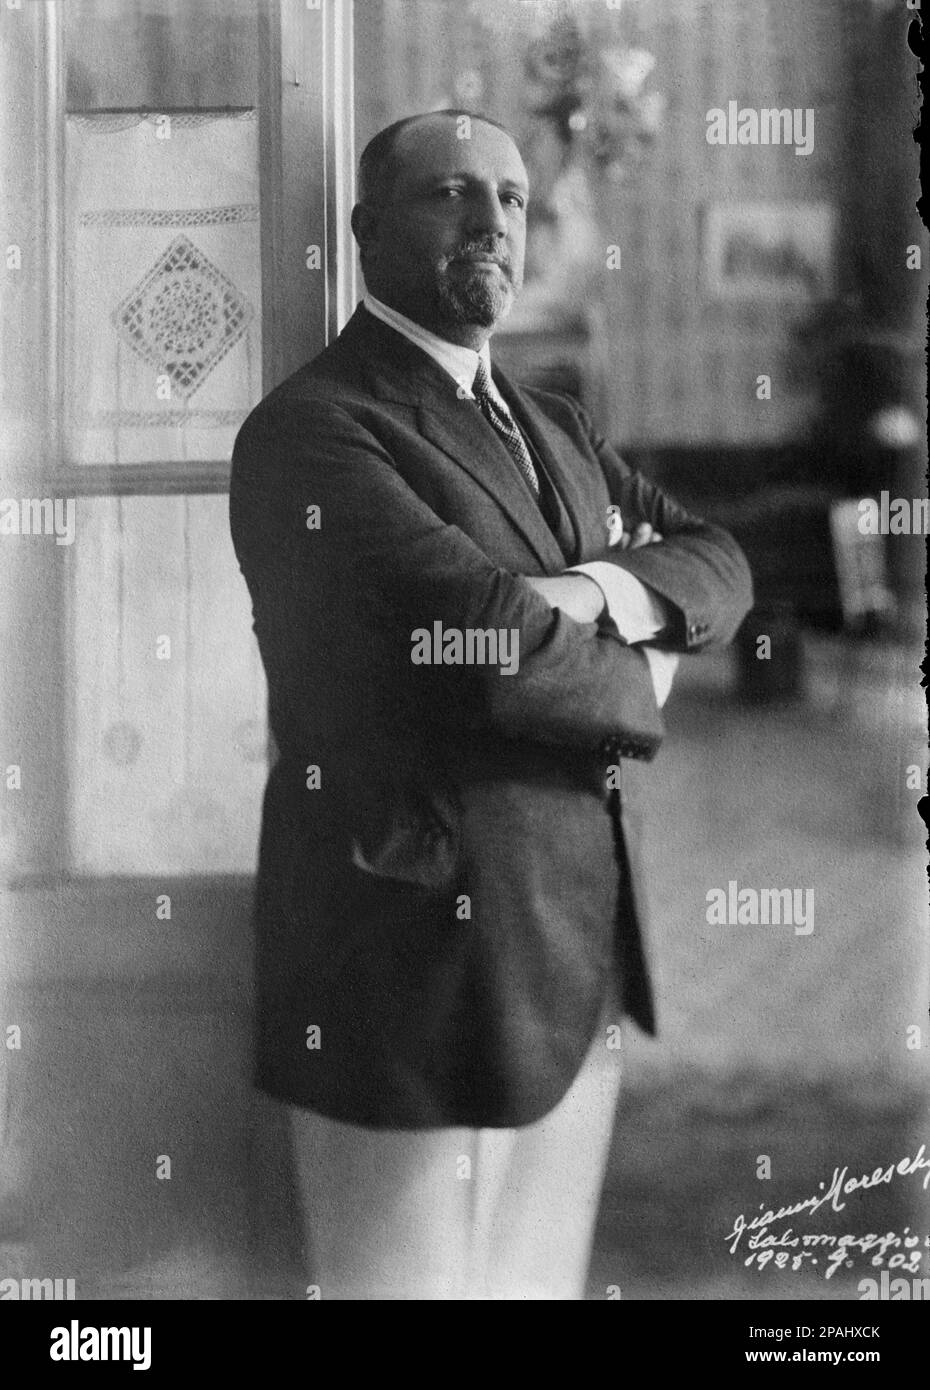 1925 , Salsomaggiore terme , Parme , ITALIE : le comte italien GIUSEPPE VOLPI di MISURATA ( 1877 - 1947 ) , responsable de la dette commerciale avec l'Italie et les Etats-Unis . Photo de Gianni Maresca , Salsomaggiore - Nobilta' italiana - noblesse - ritratto - portrait - barbe - barba - collier - colletto - cravate - cravatta - conte - FASCISMO - FASCISTA - FASCISTE - FASCISME - INDUSTRIEL - ARCHIO - POLITICA - POLITIC - POLITICIEN ----- GBB POLITIST Banque D'Images